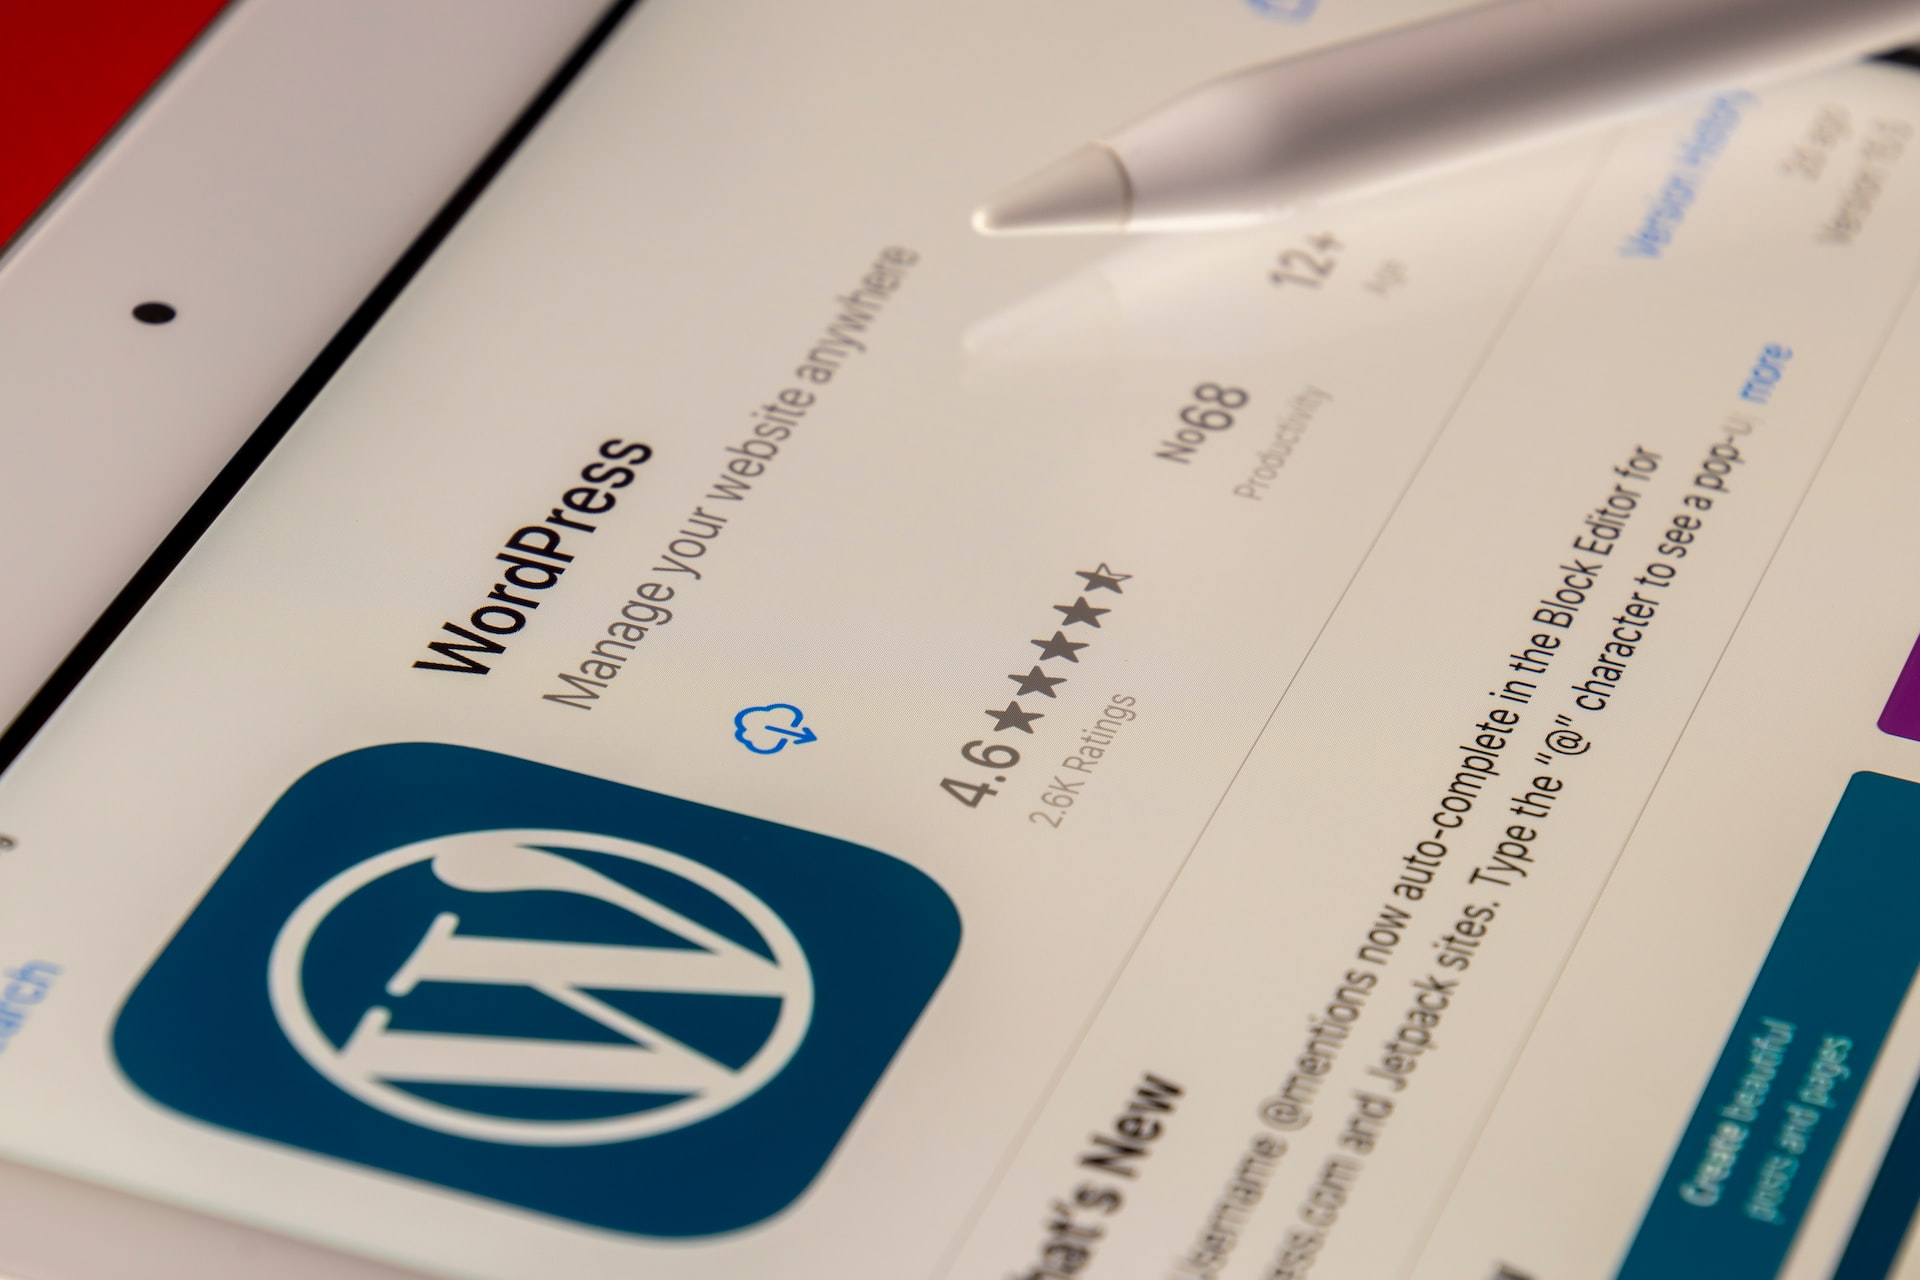 WordPress Gutenberg CMS open on a tablet